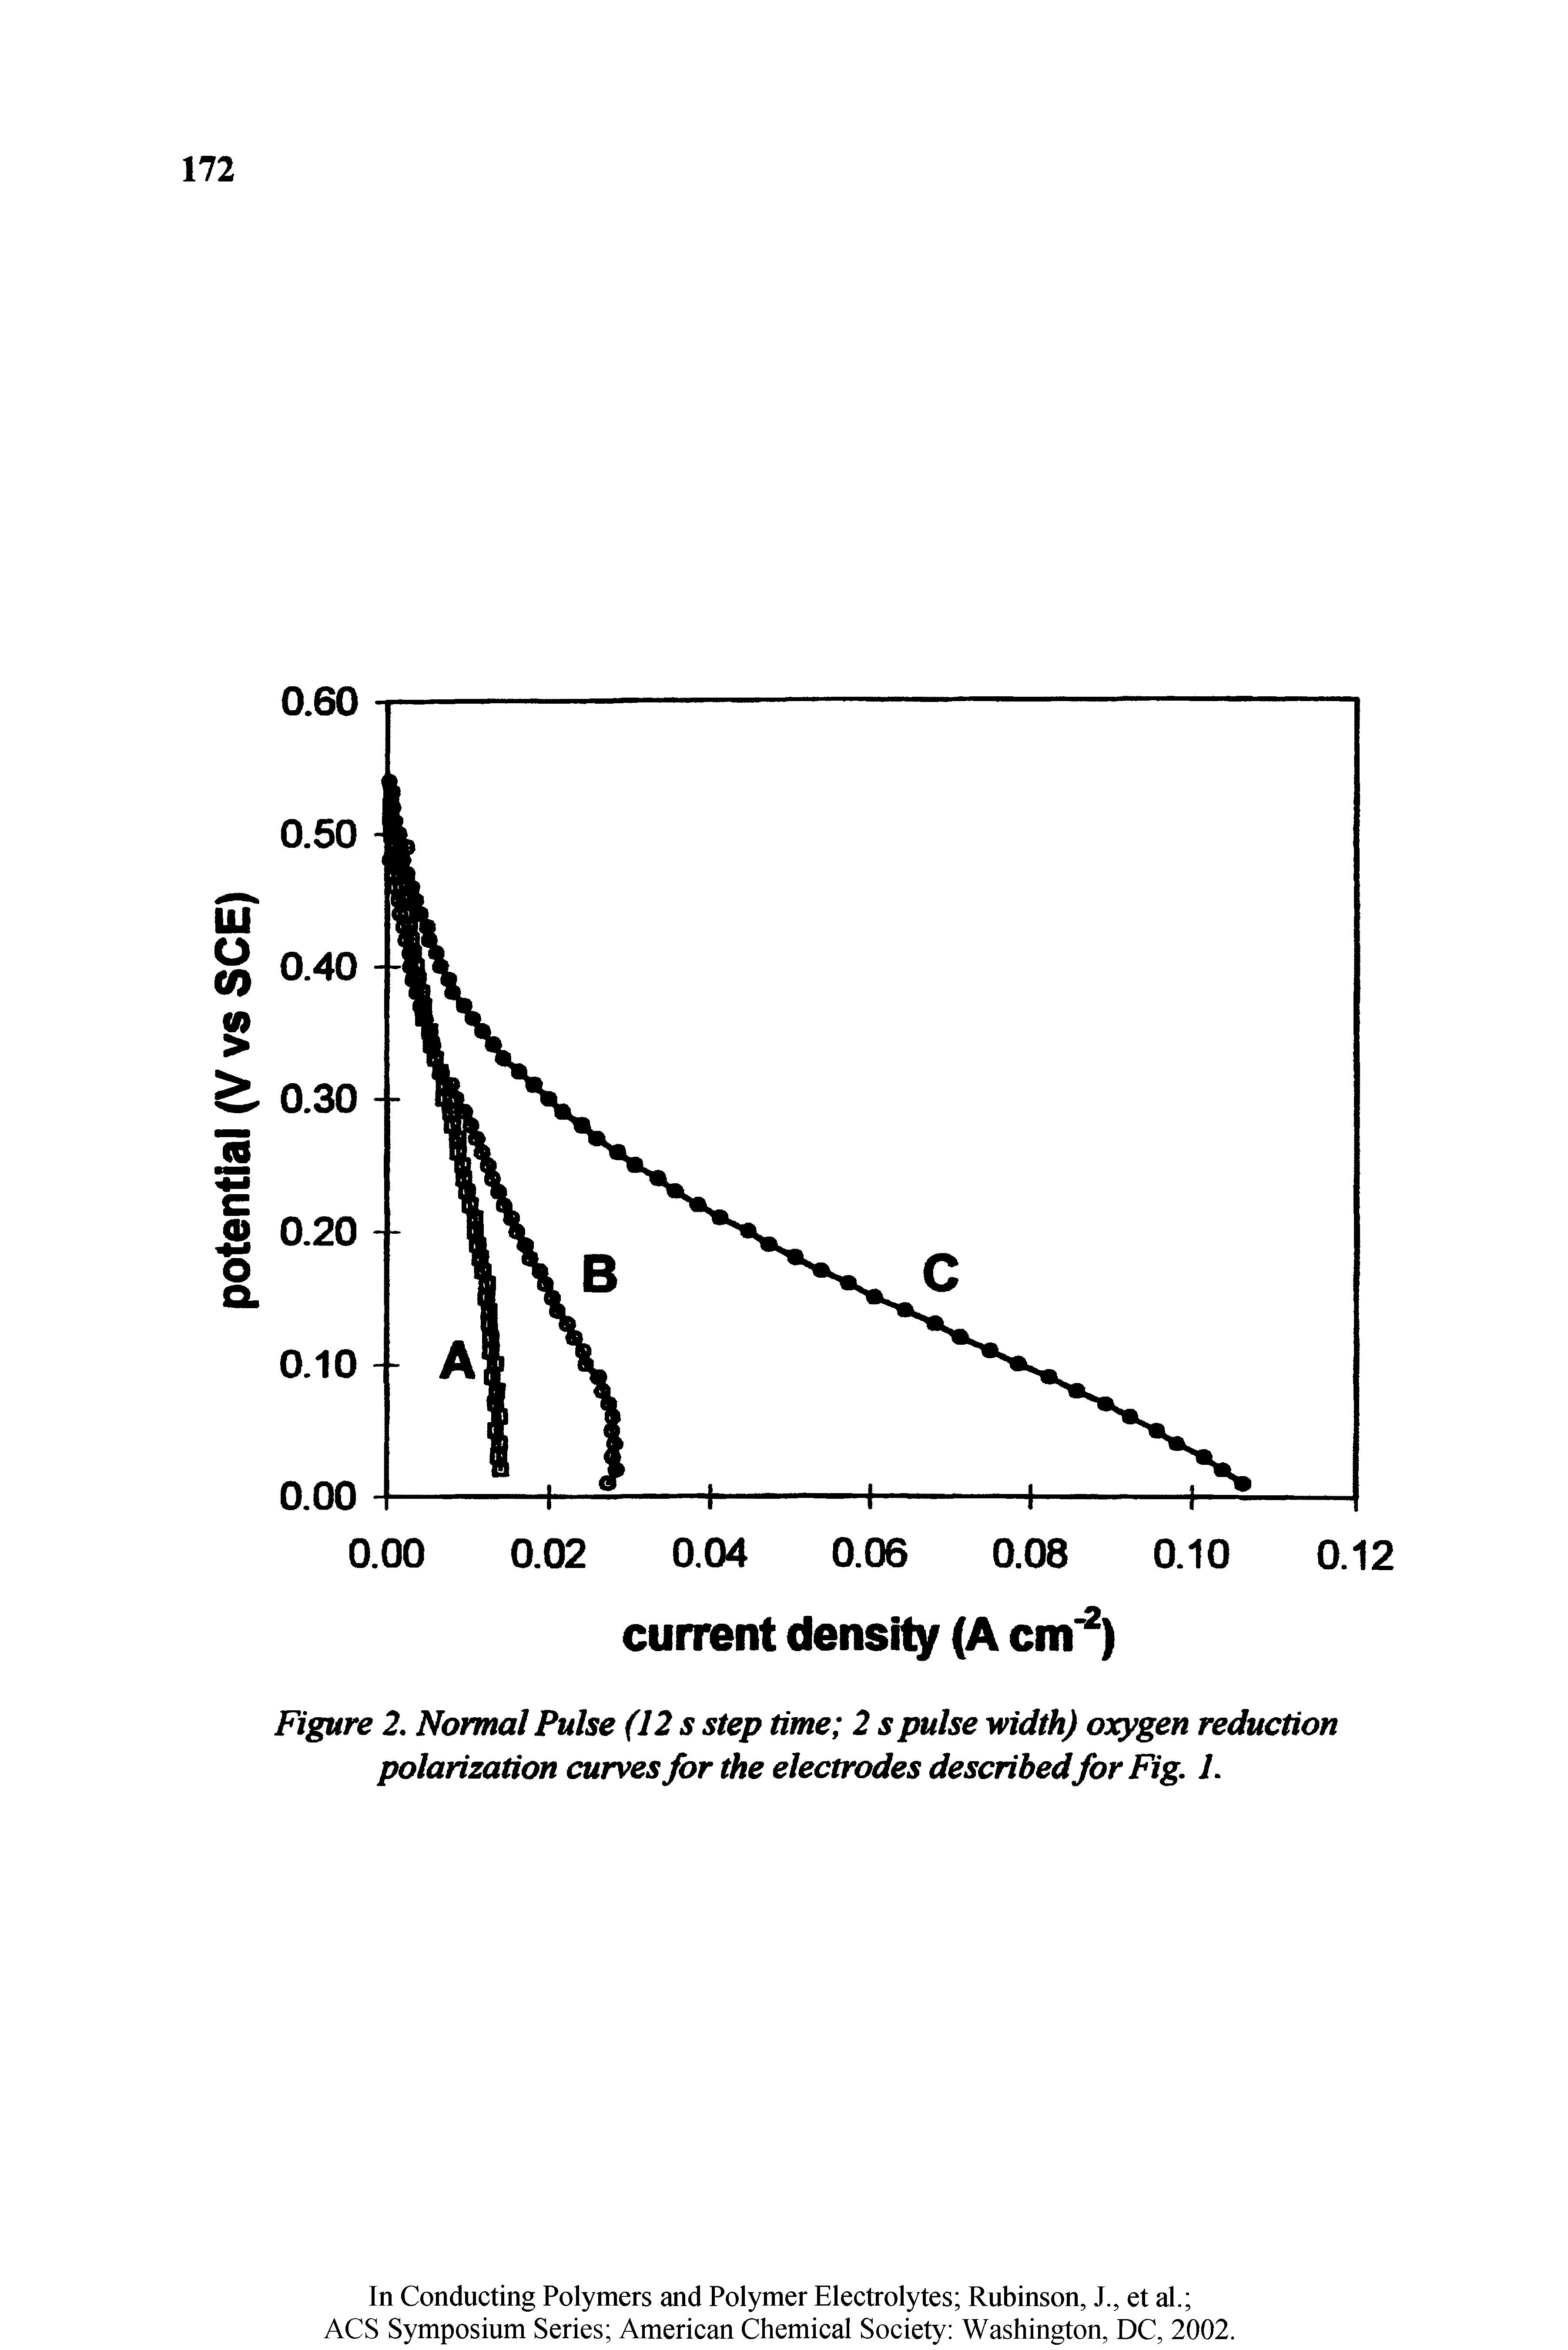 Figure 2. Normal Pulse (12 s step time 2 s pulse width) oxygen reduction polarization curves for the electrodes describedfor Fig. J.